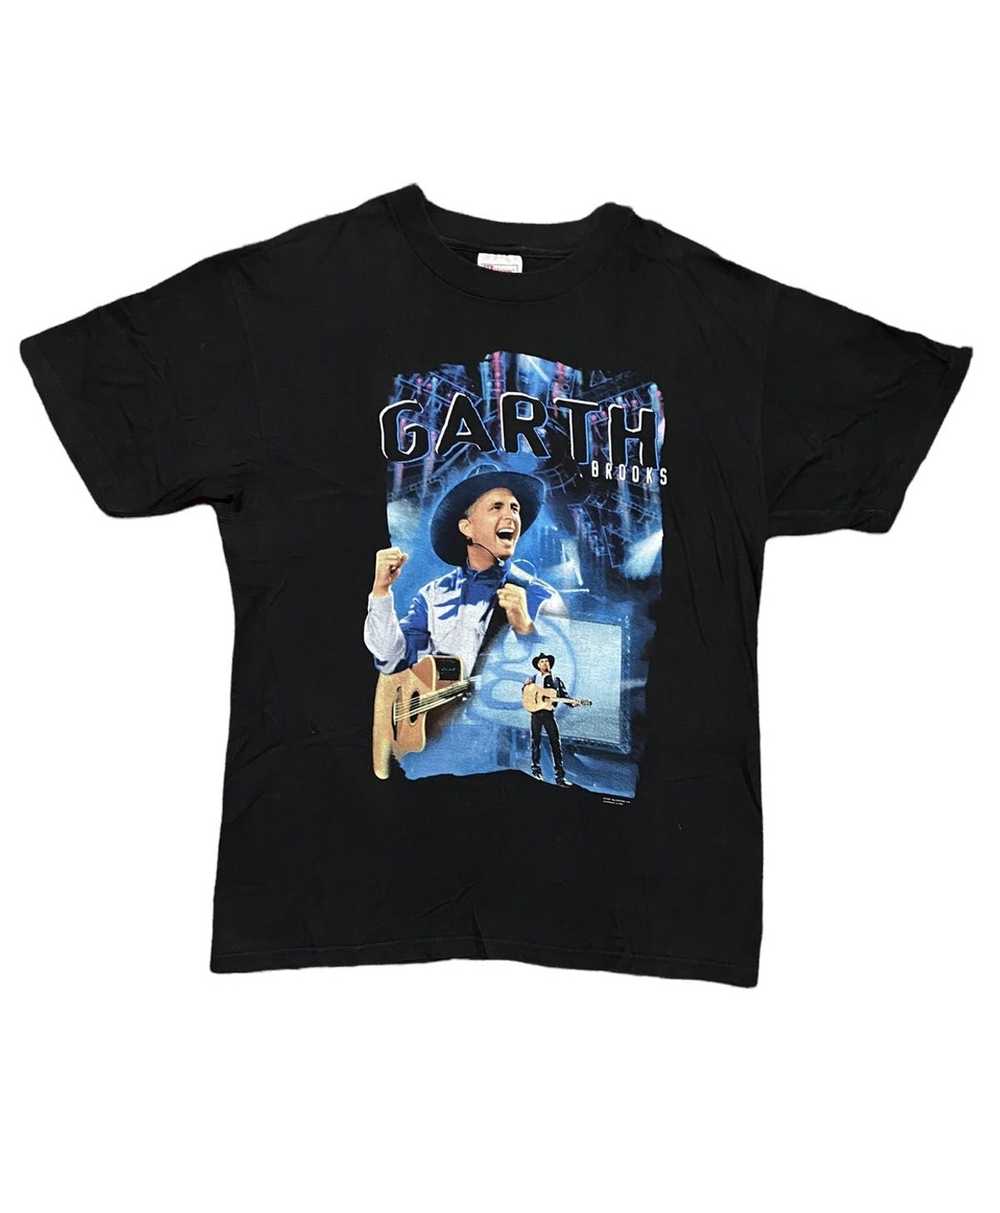 Vintage Garth Brooks t shirt 1997 - image 1